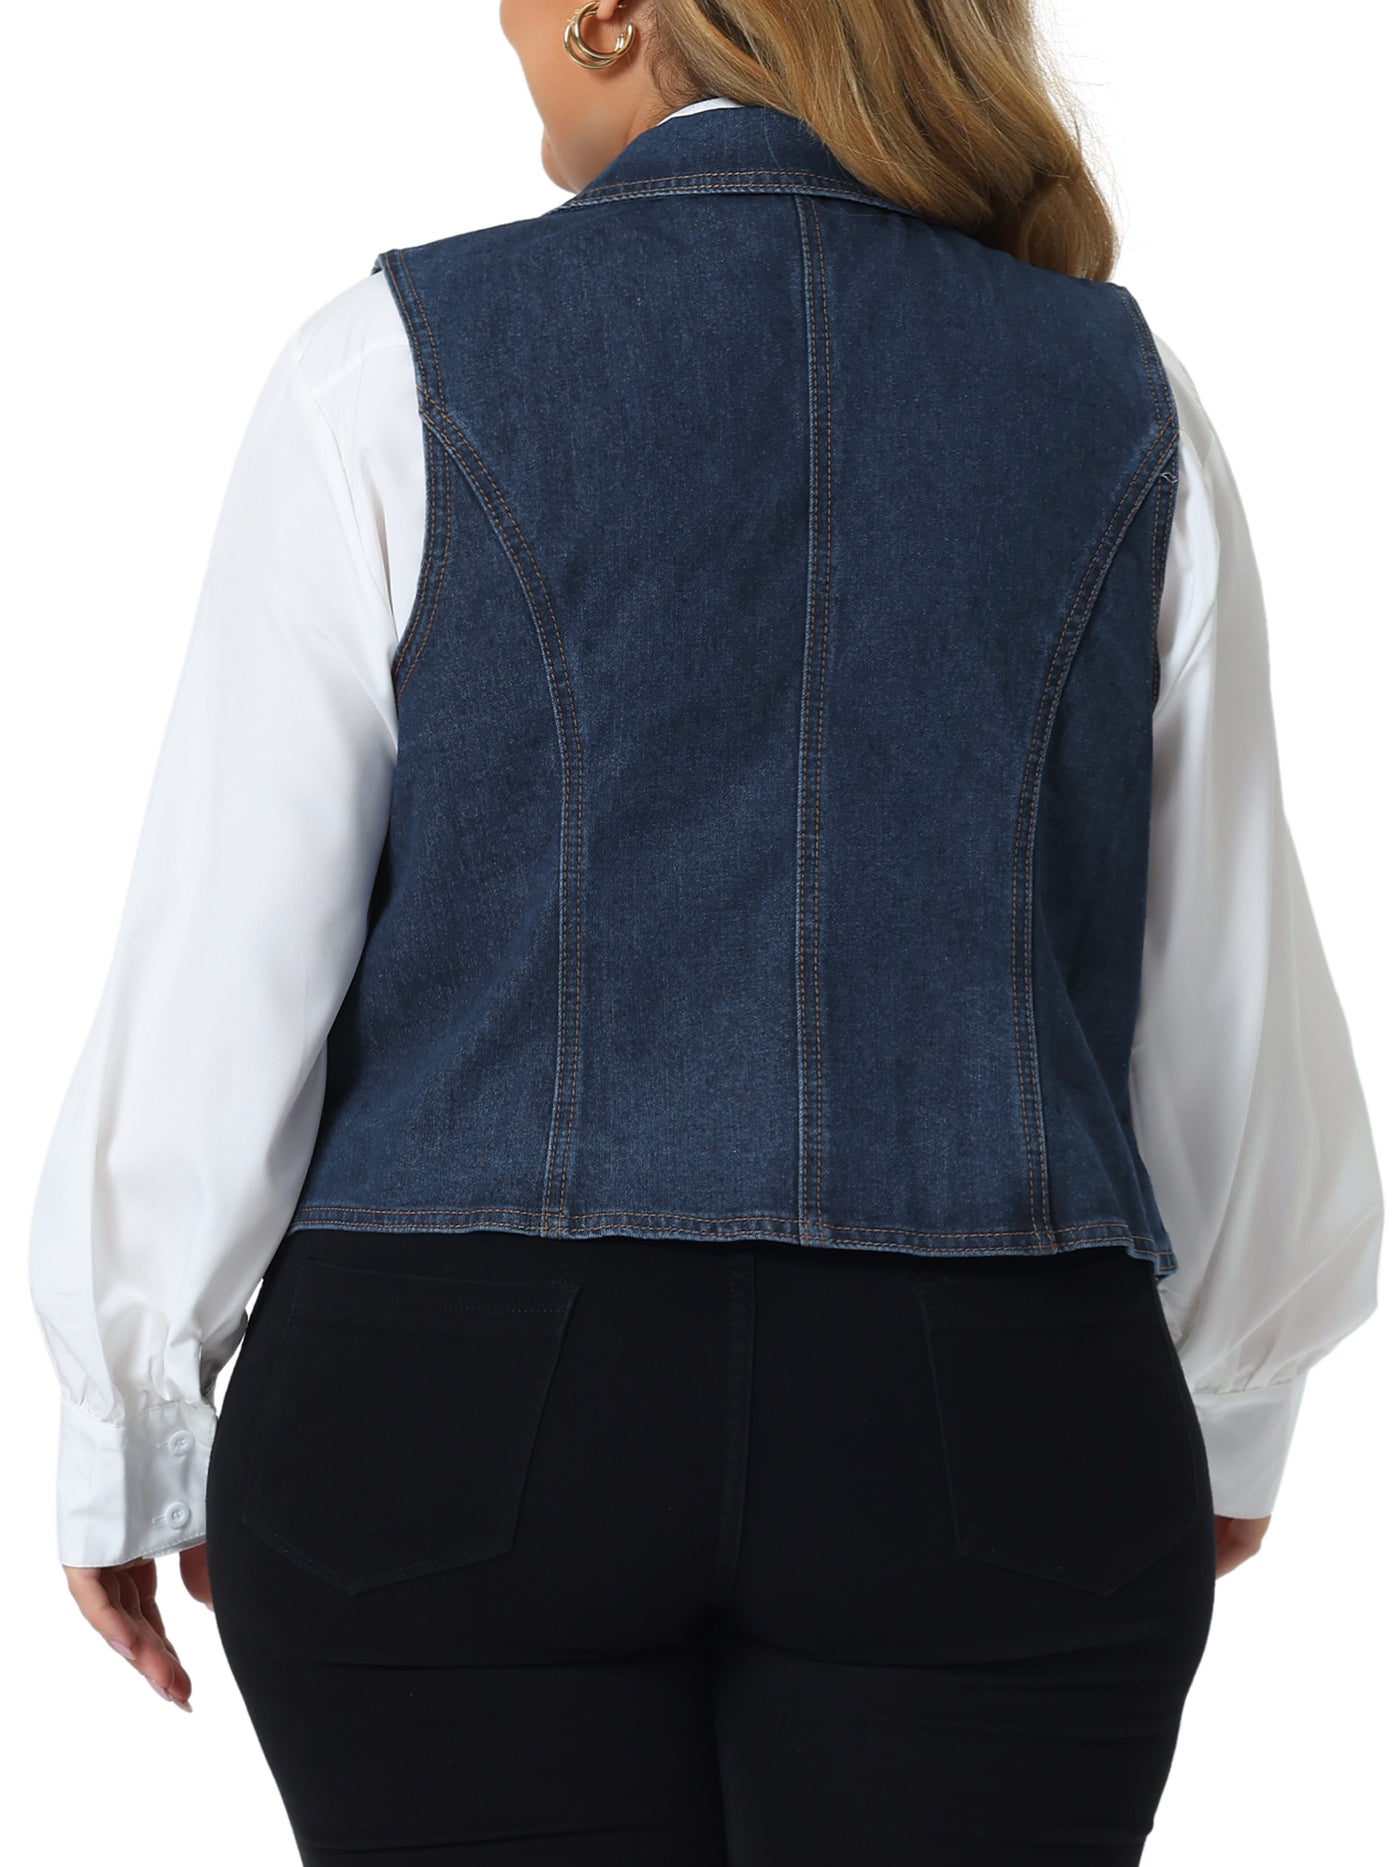 Bublédon Plus Size Denim Vest for Women Sleeveless Lapel Casual Lightweight Buttons Jackets